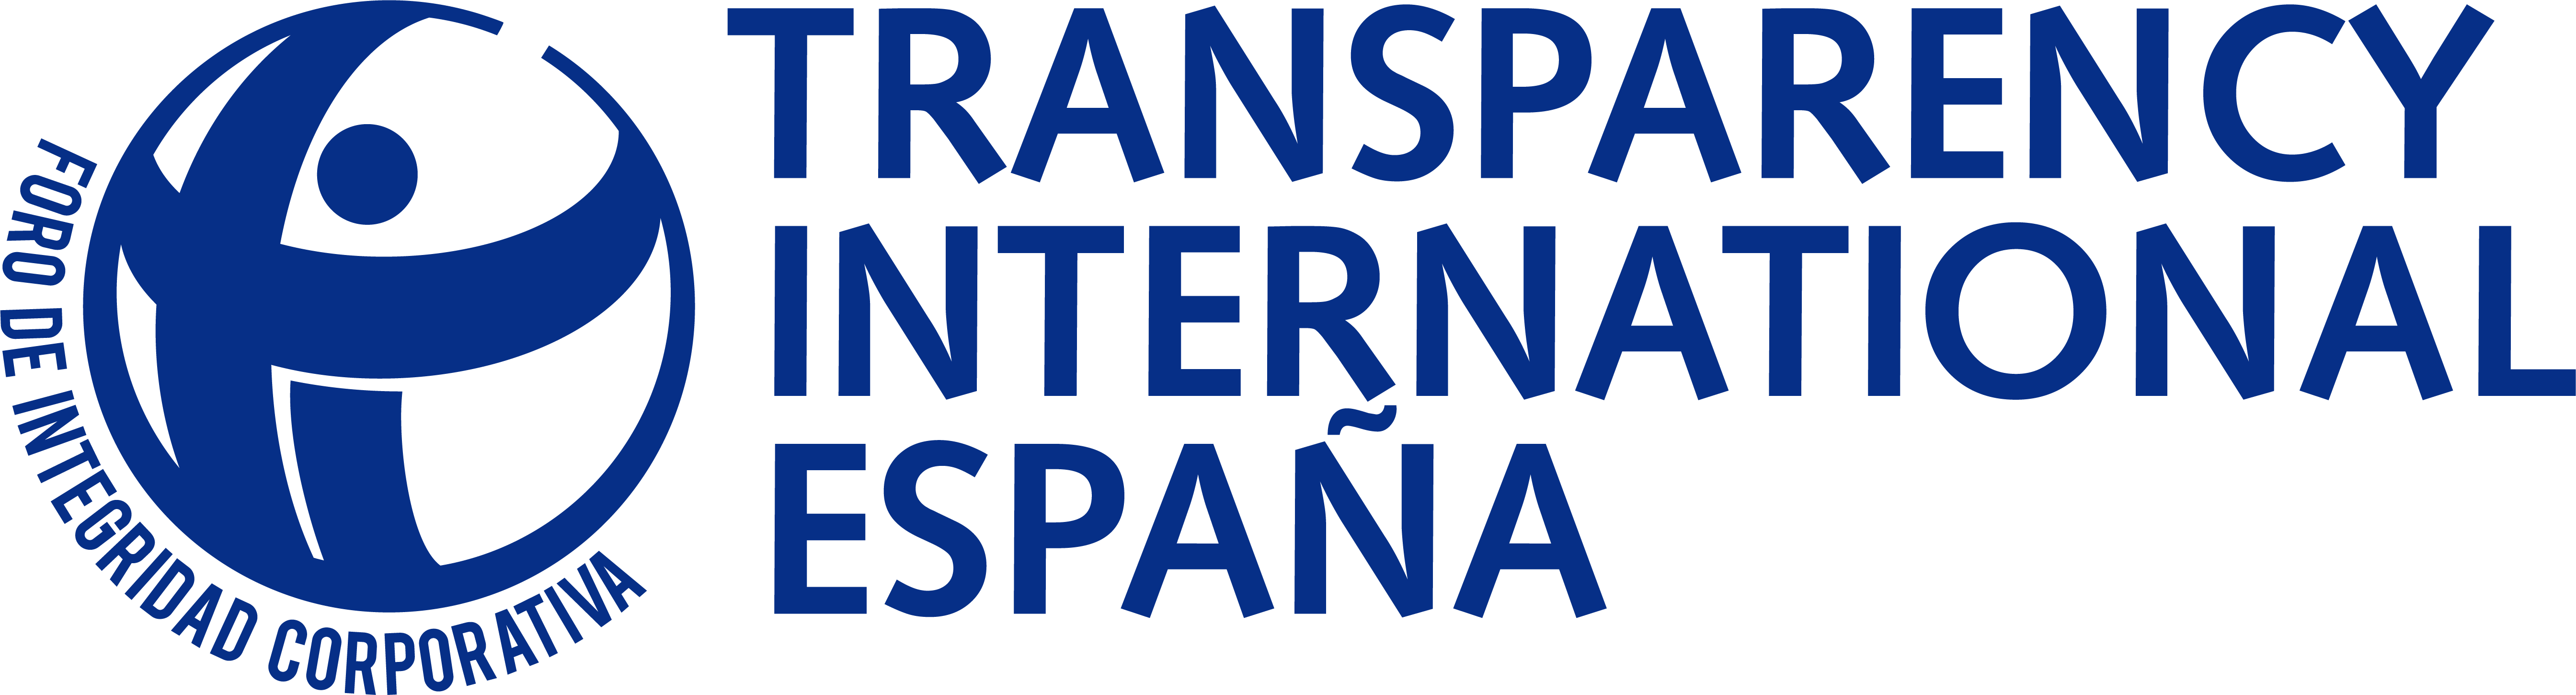 transparency international españa